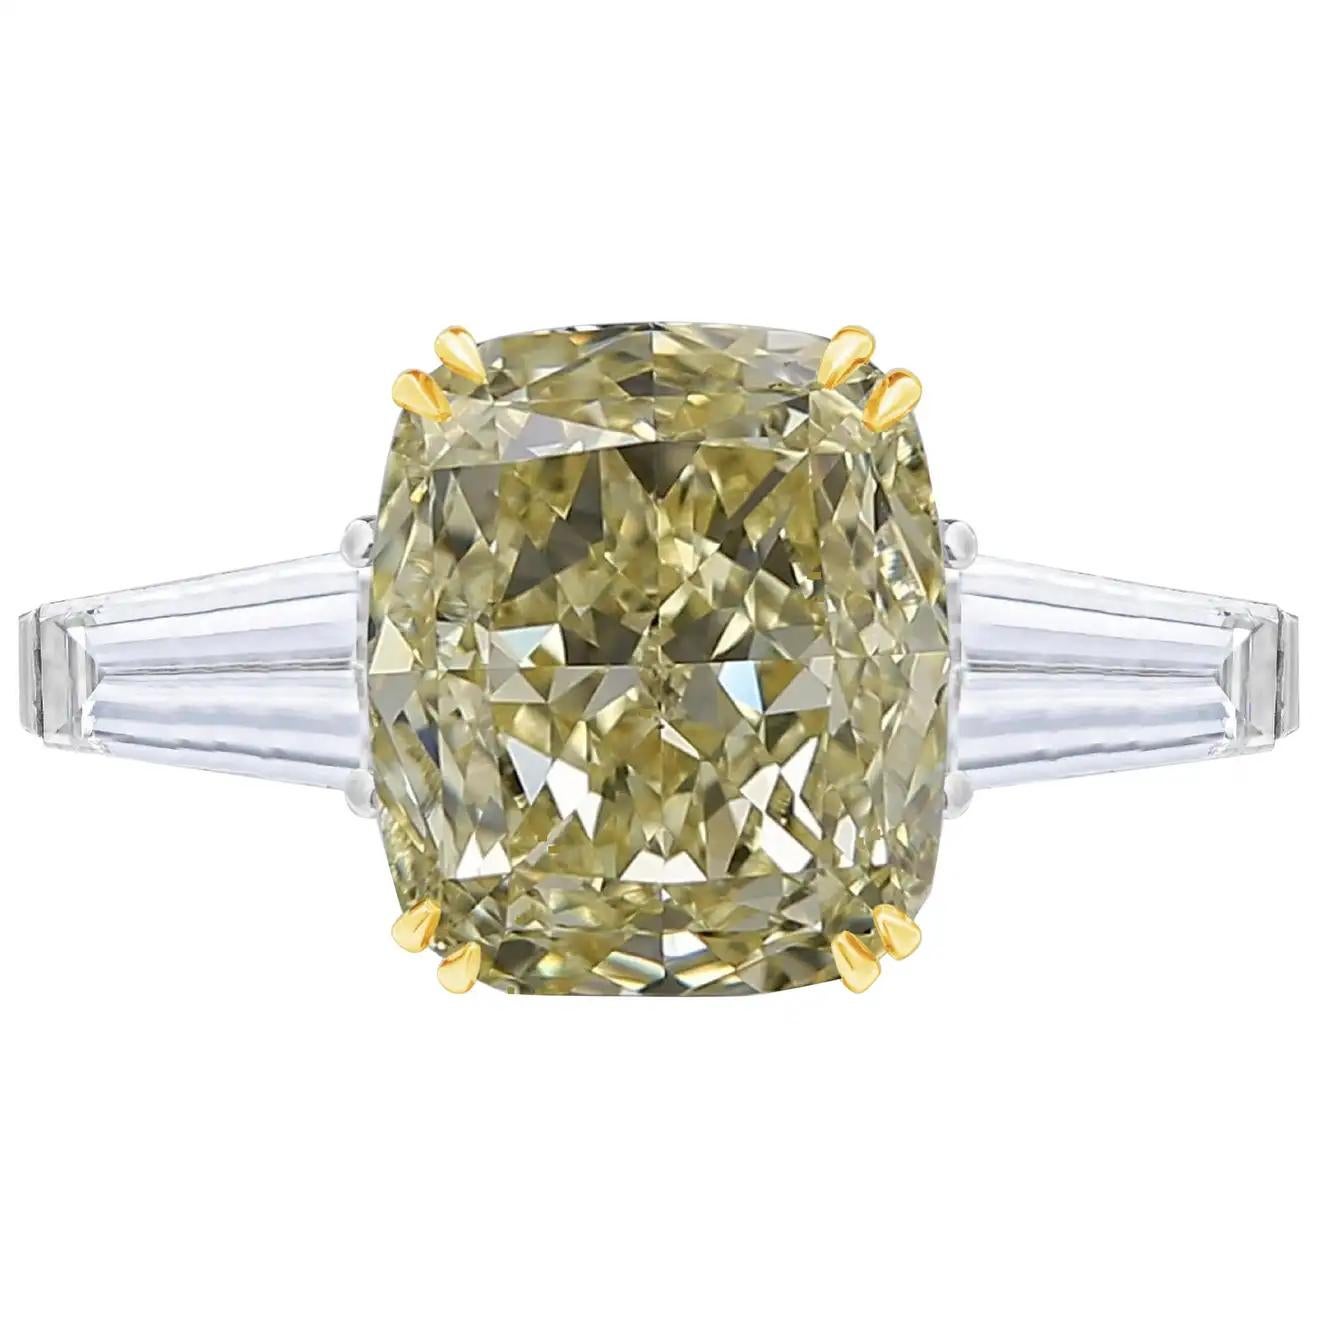 2.5 carat yellow diamond ring